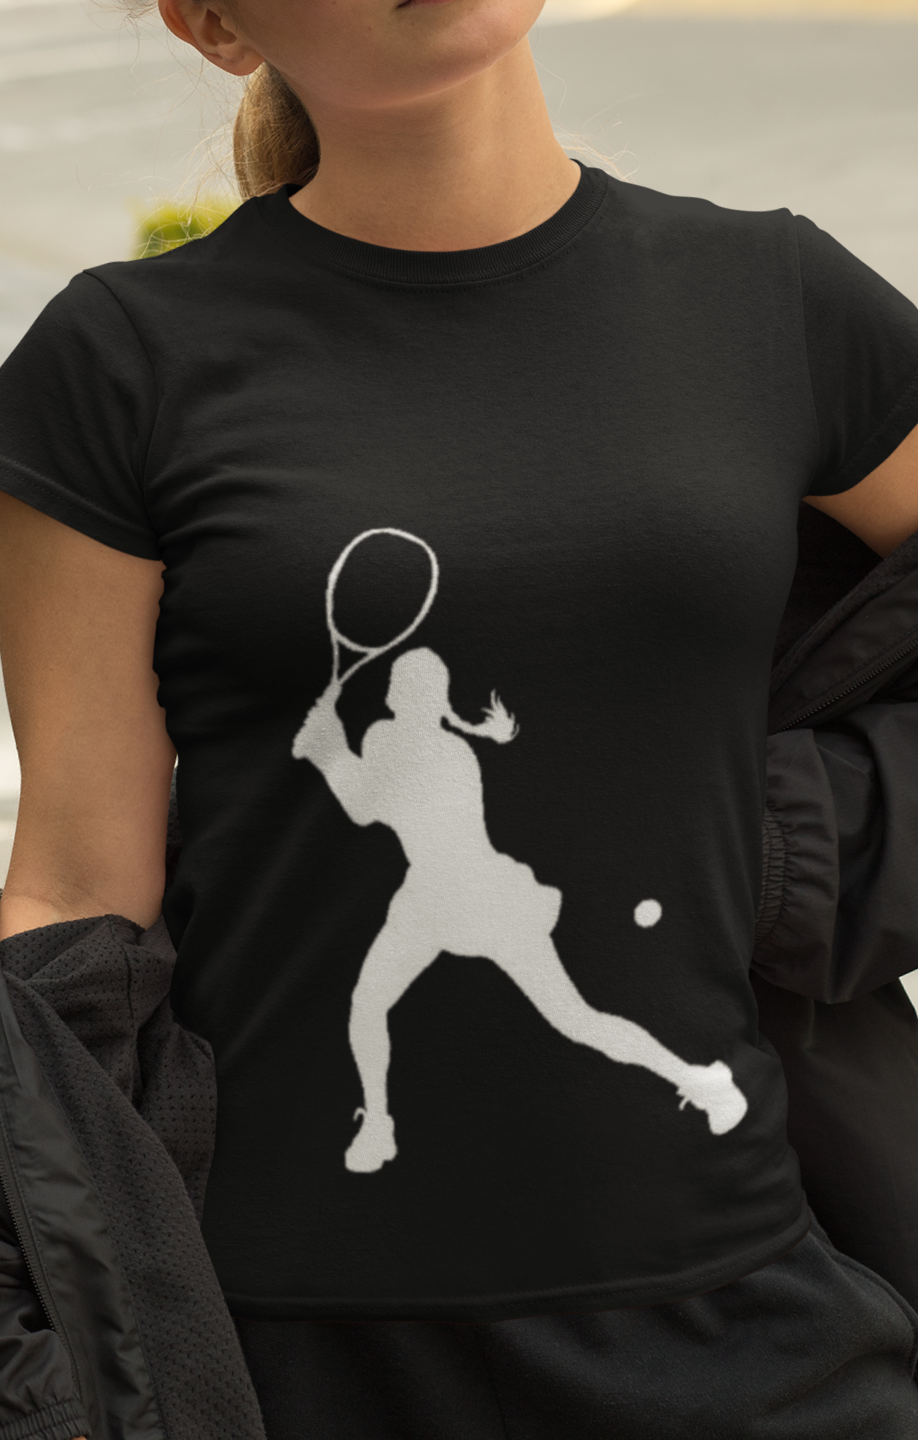 I LOVE TENNIS! Unisex t-shirt